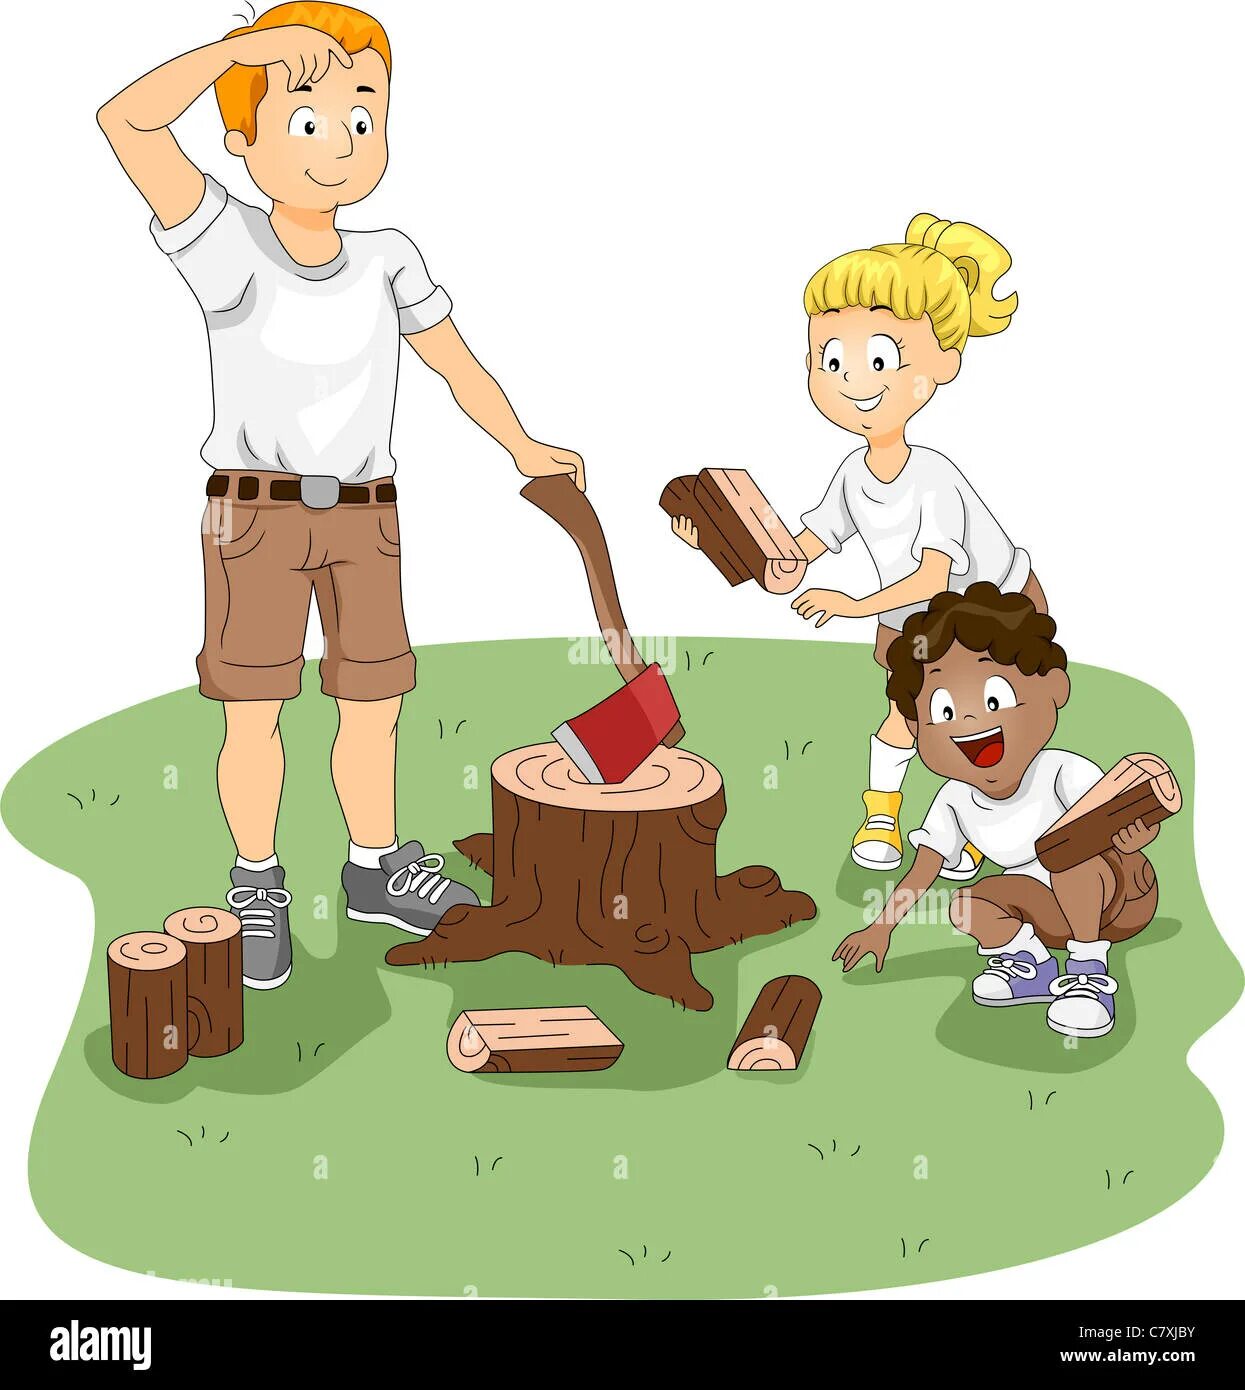 Что угодно картинки. Папа рубит дрова. Дети рубят дрова. Расколю дрова иллюстрация. Папа рубит дрова для детей.